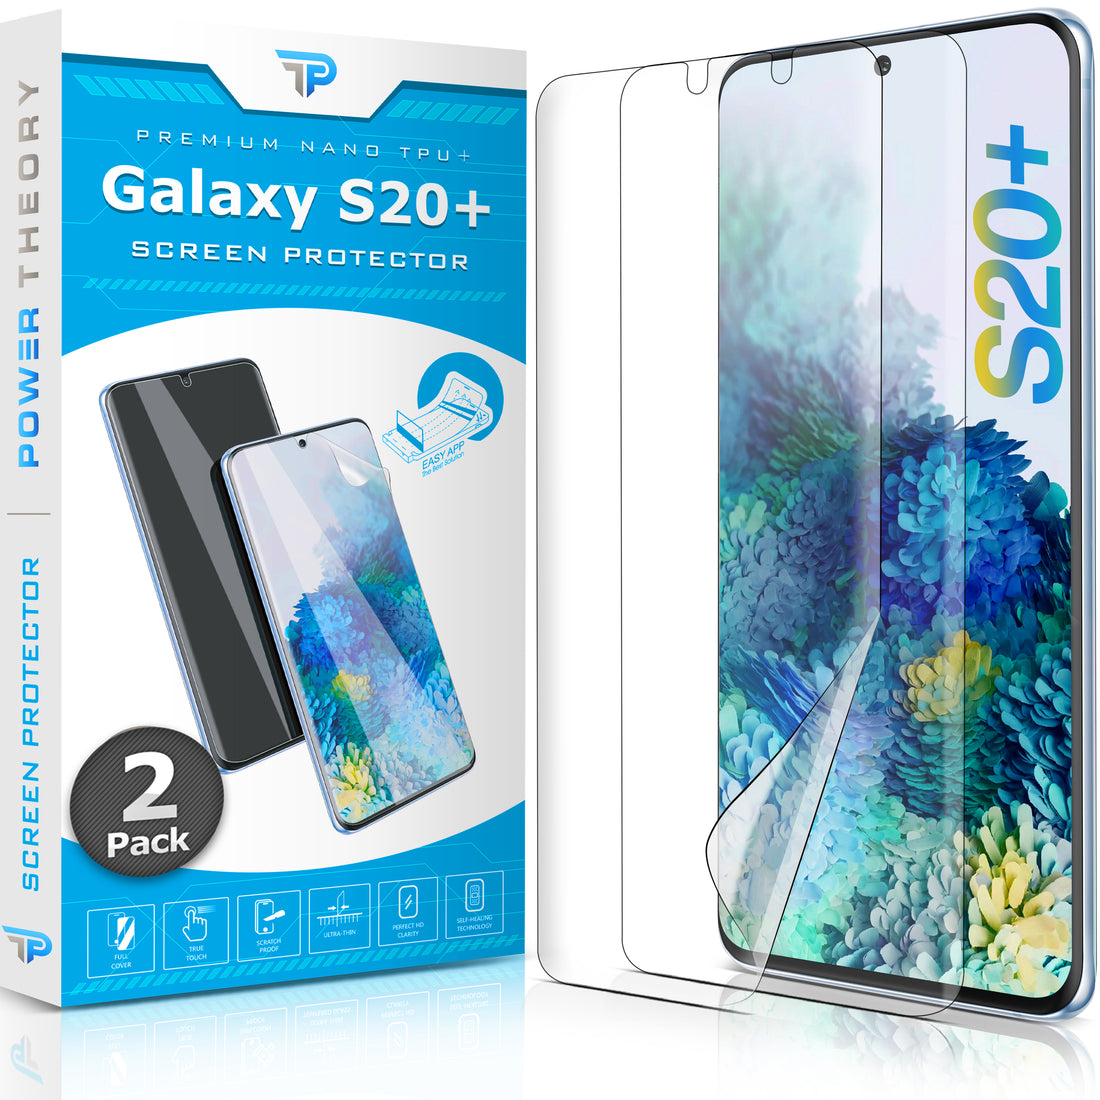 Samsung Galaxy S20 Plus TPU Anti-Scratch Screen Protector Film [2-Pack] Preview #1